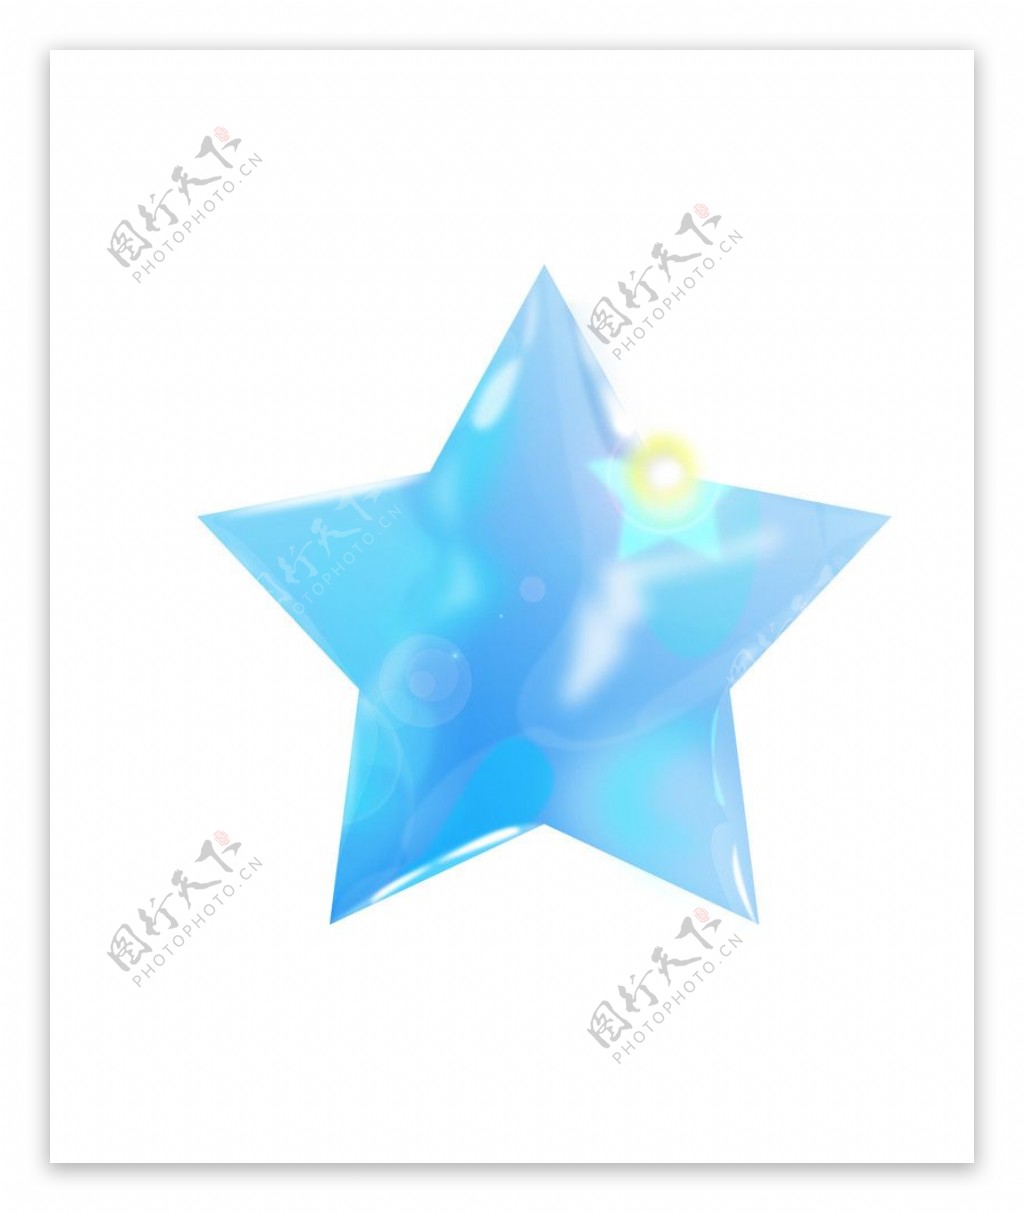 个性水晶星星